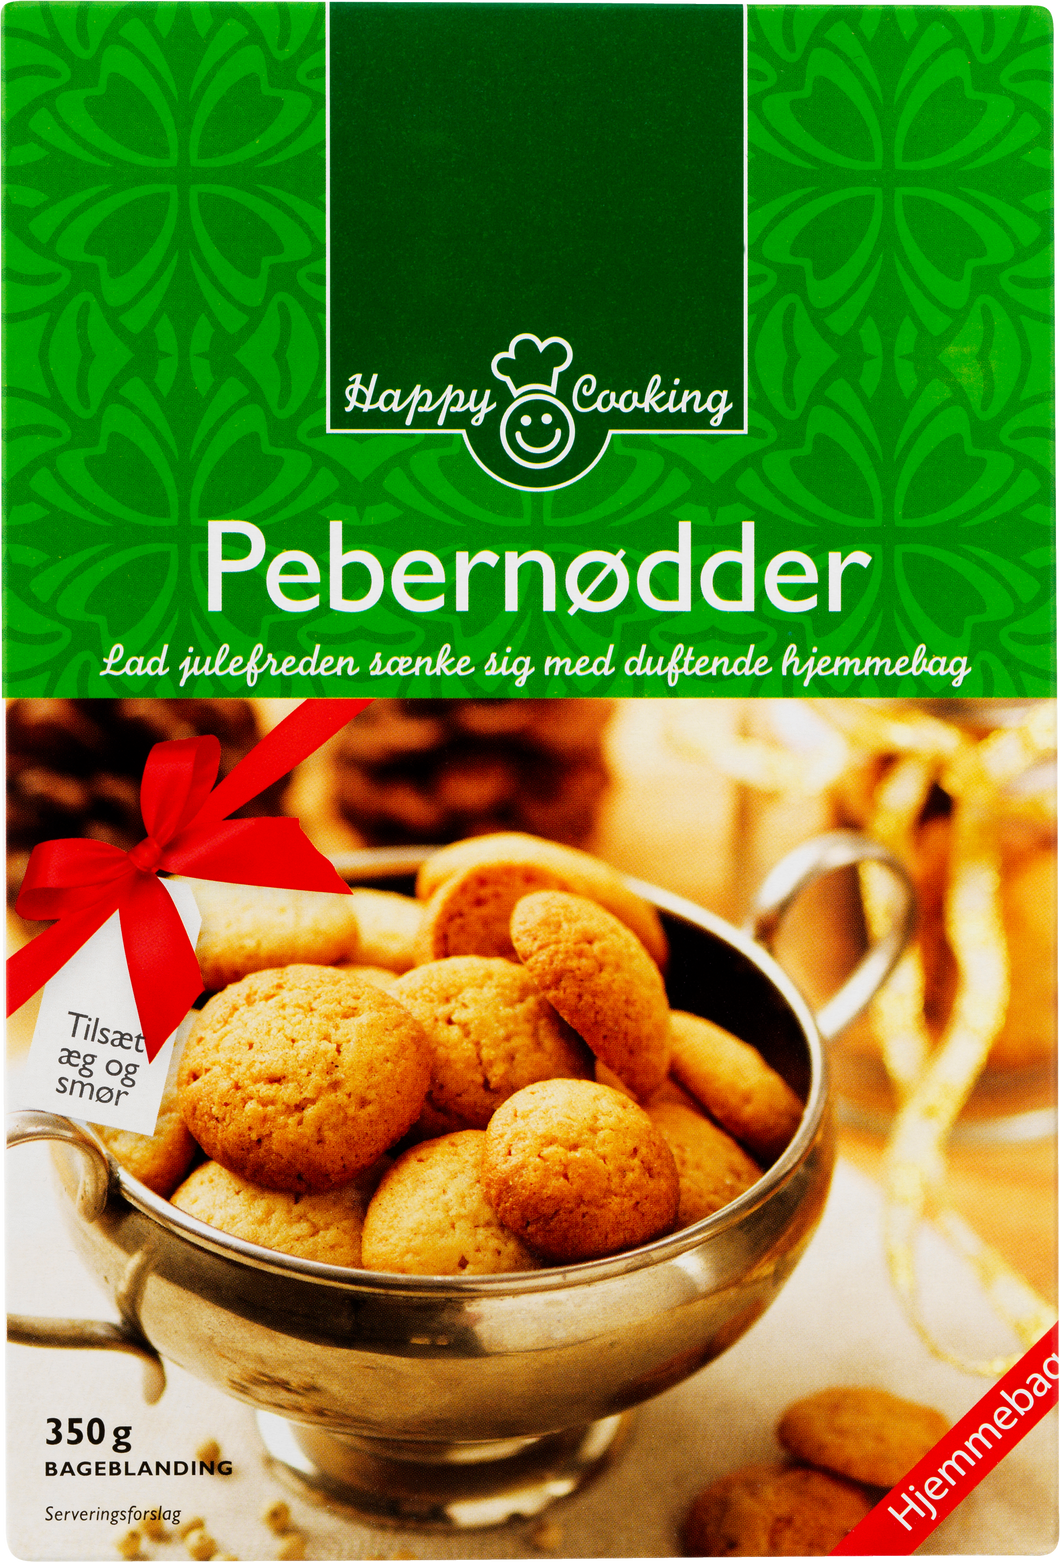 Pebernødder (Spicy Danish Christmas Cookies)